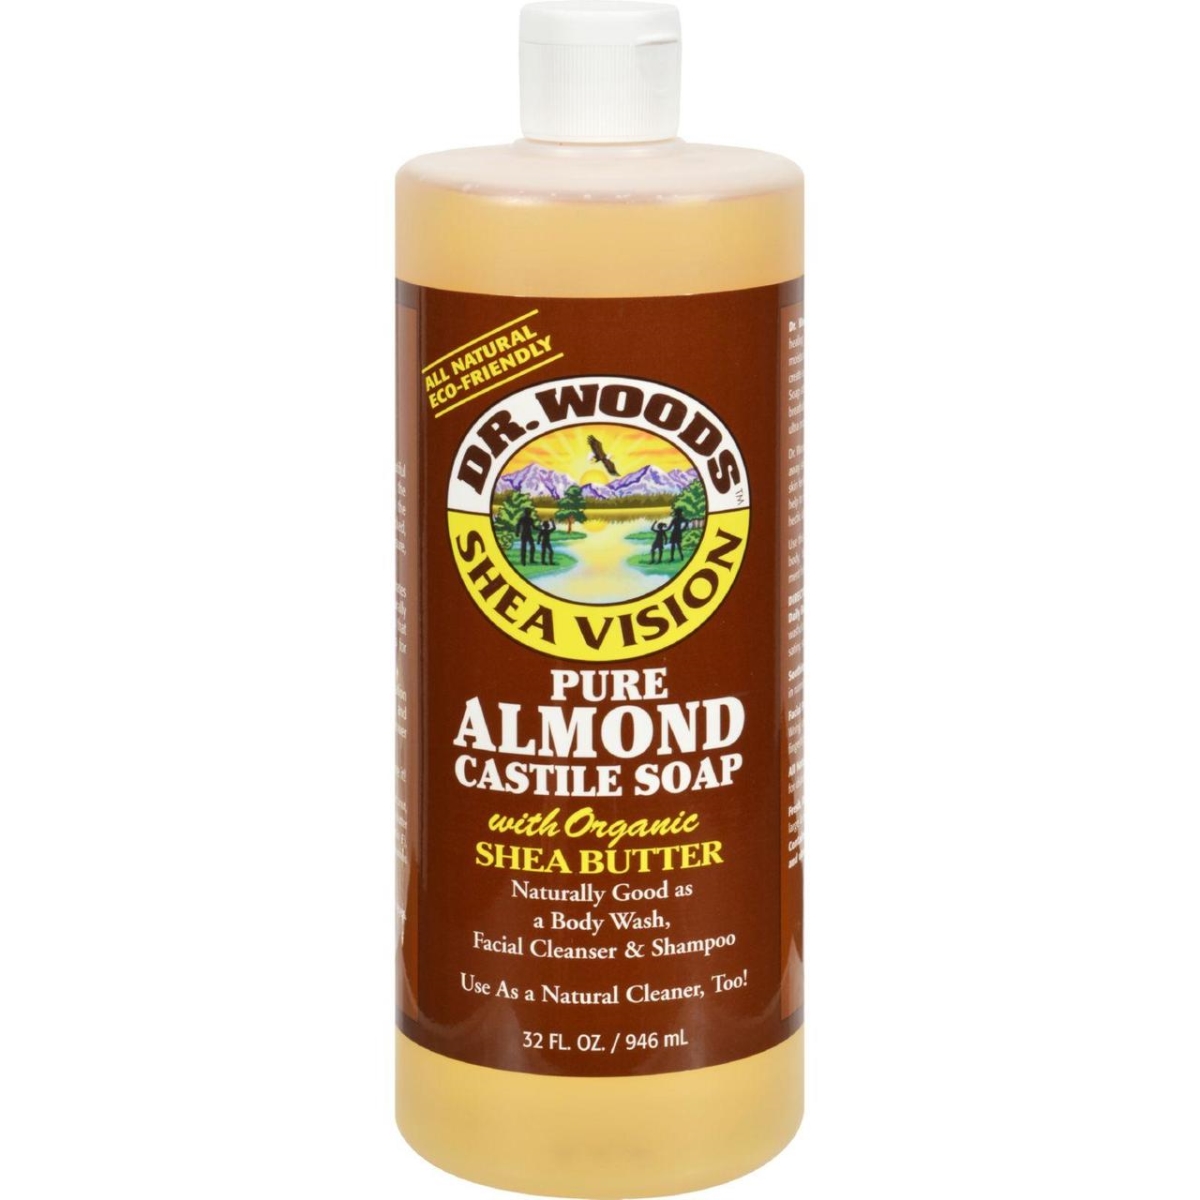 Hg0771618 32 Fl Oz Shea Vision Pure Castile Soap With Organic Shea Butter Almond